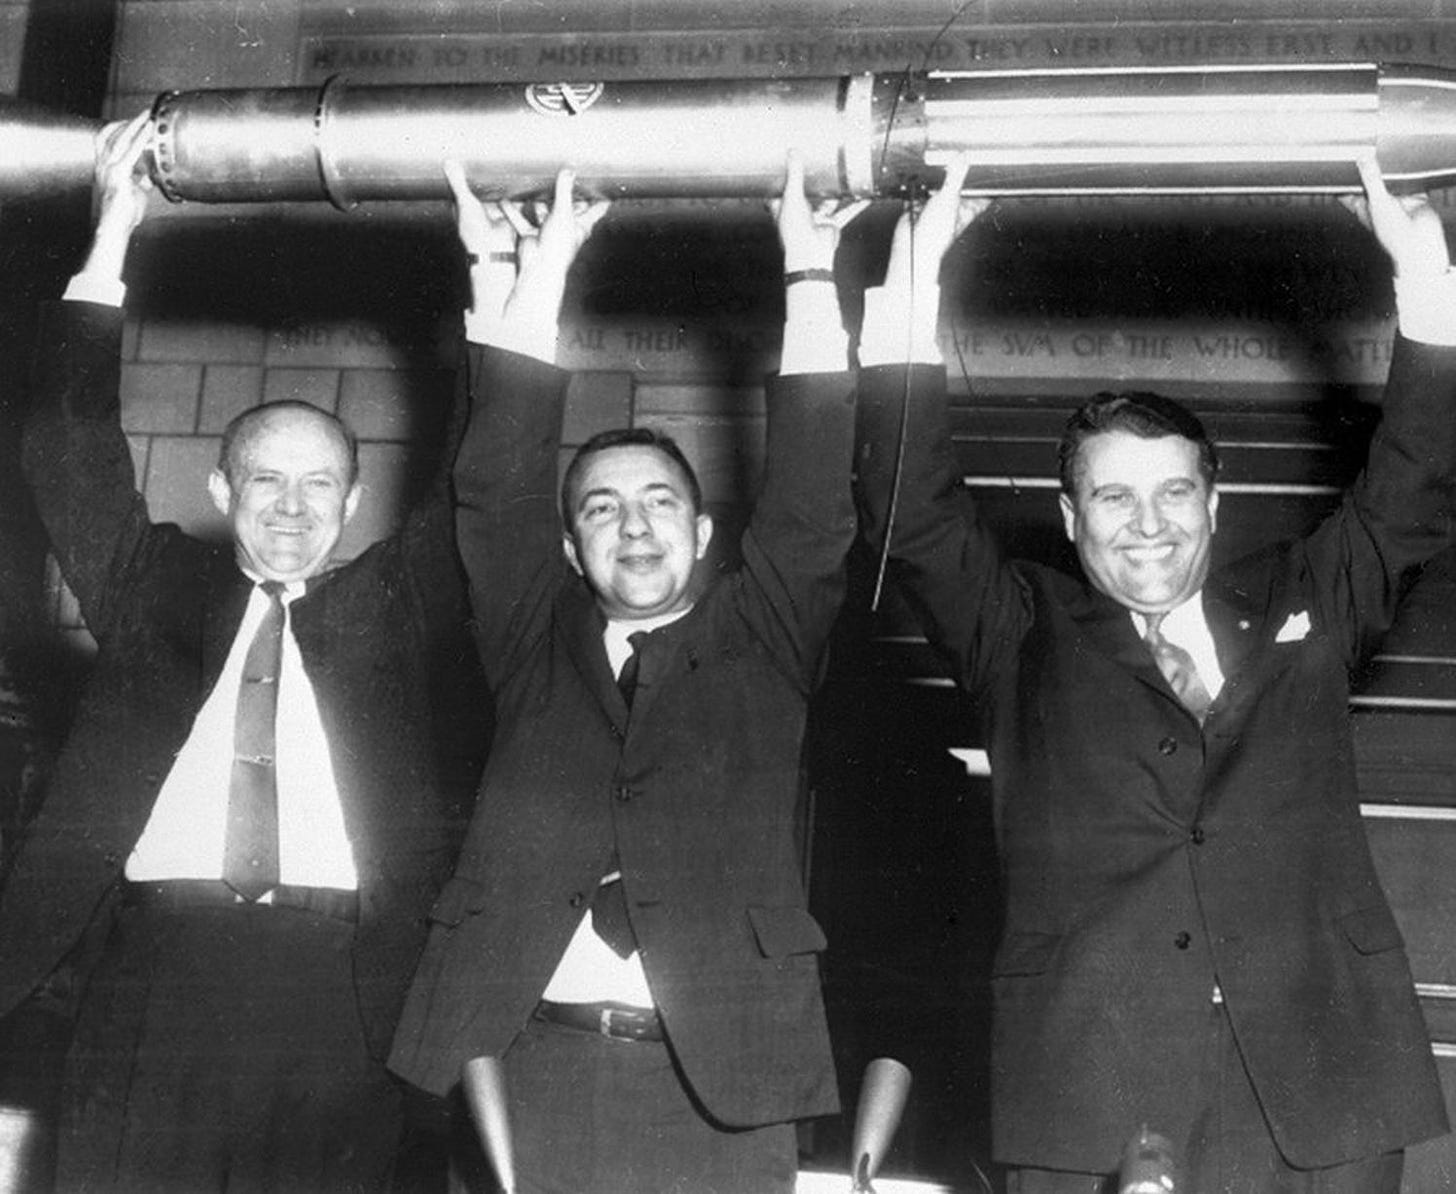 Former Nazi scientist Werner von Braun (right) celebrate the successful launch of Explorer 1 satellite: the birth of the US space program